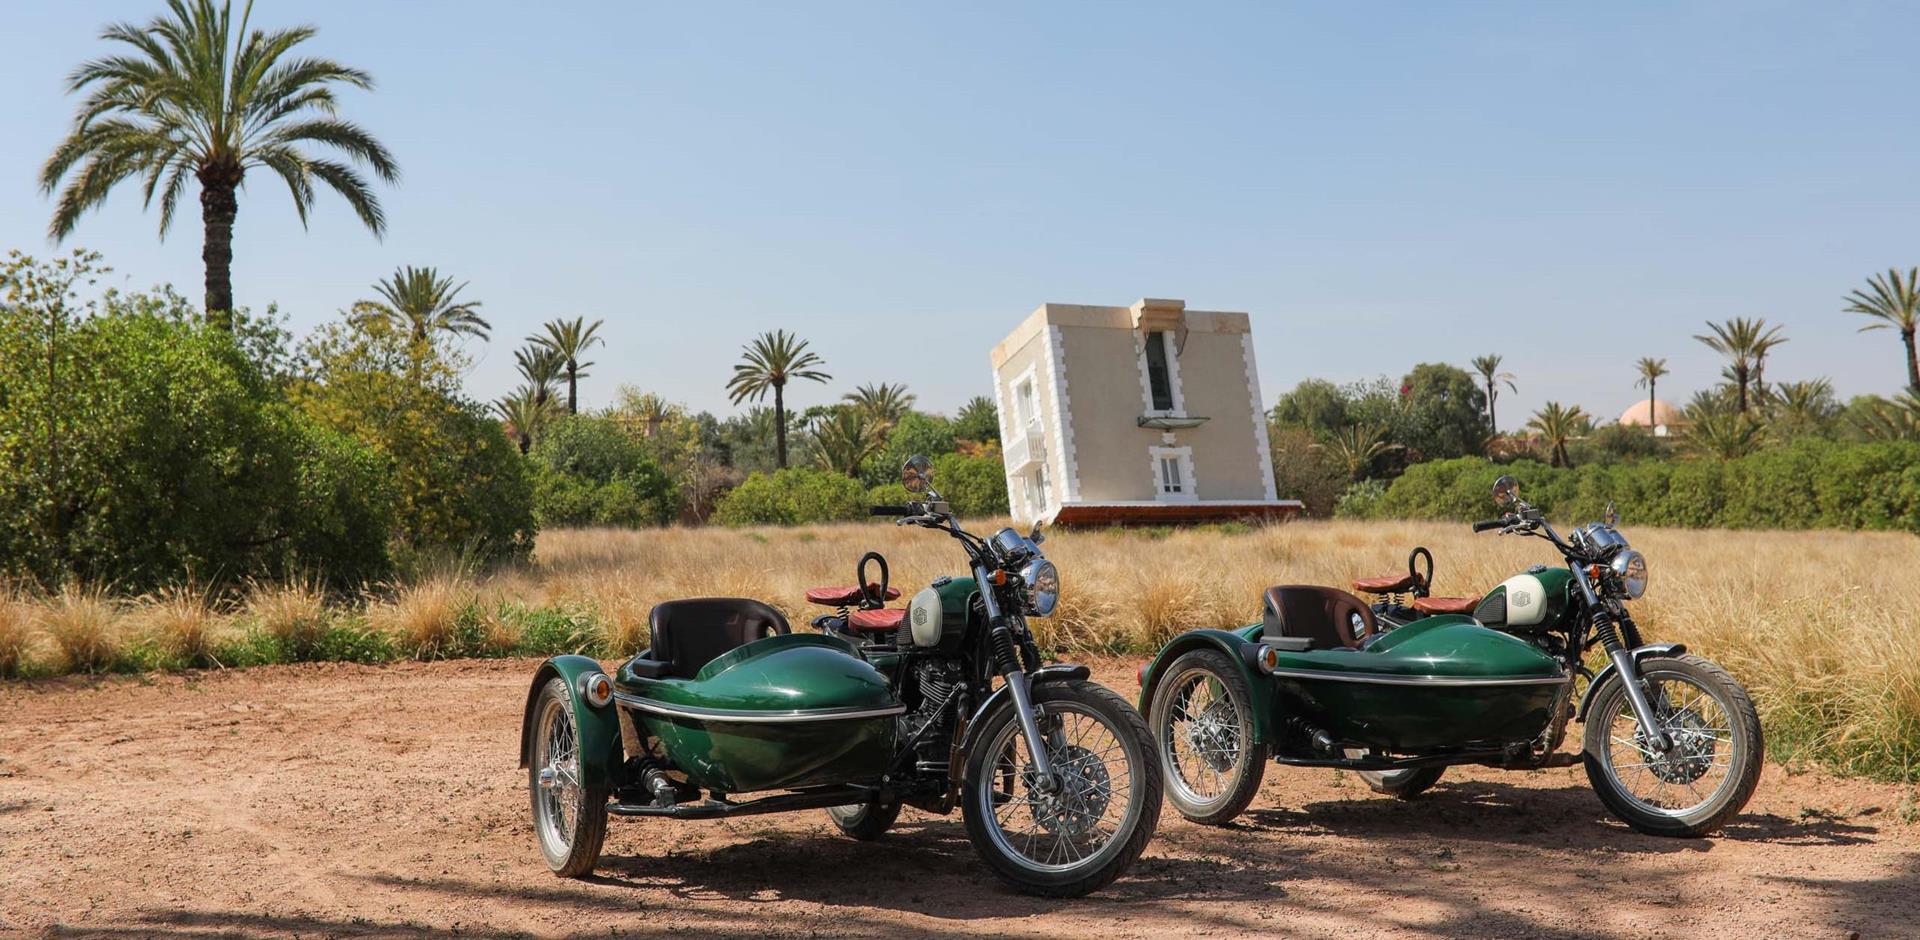 A&K Morocco experience: Sadaka sidecar experience